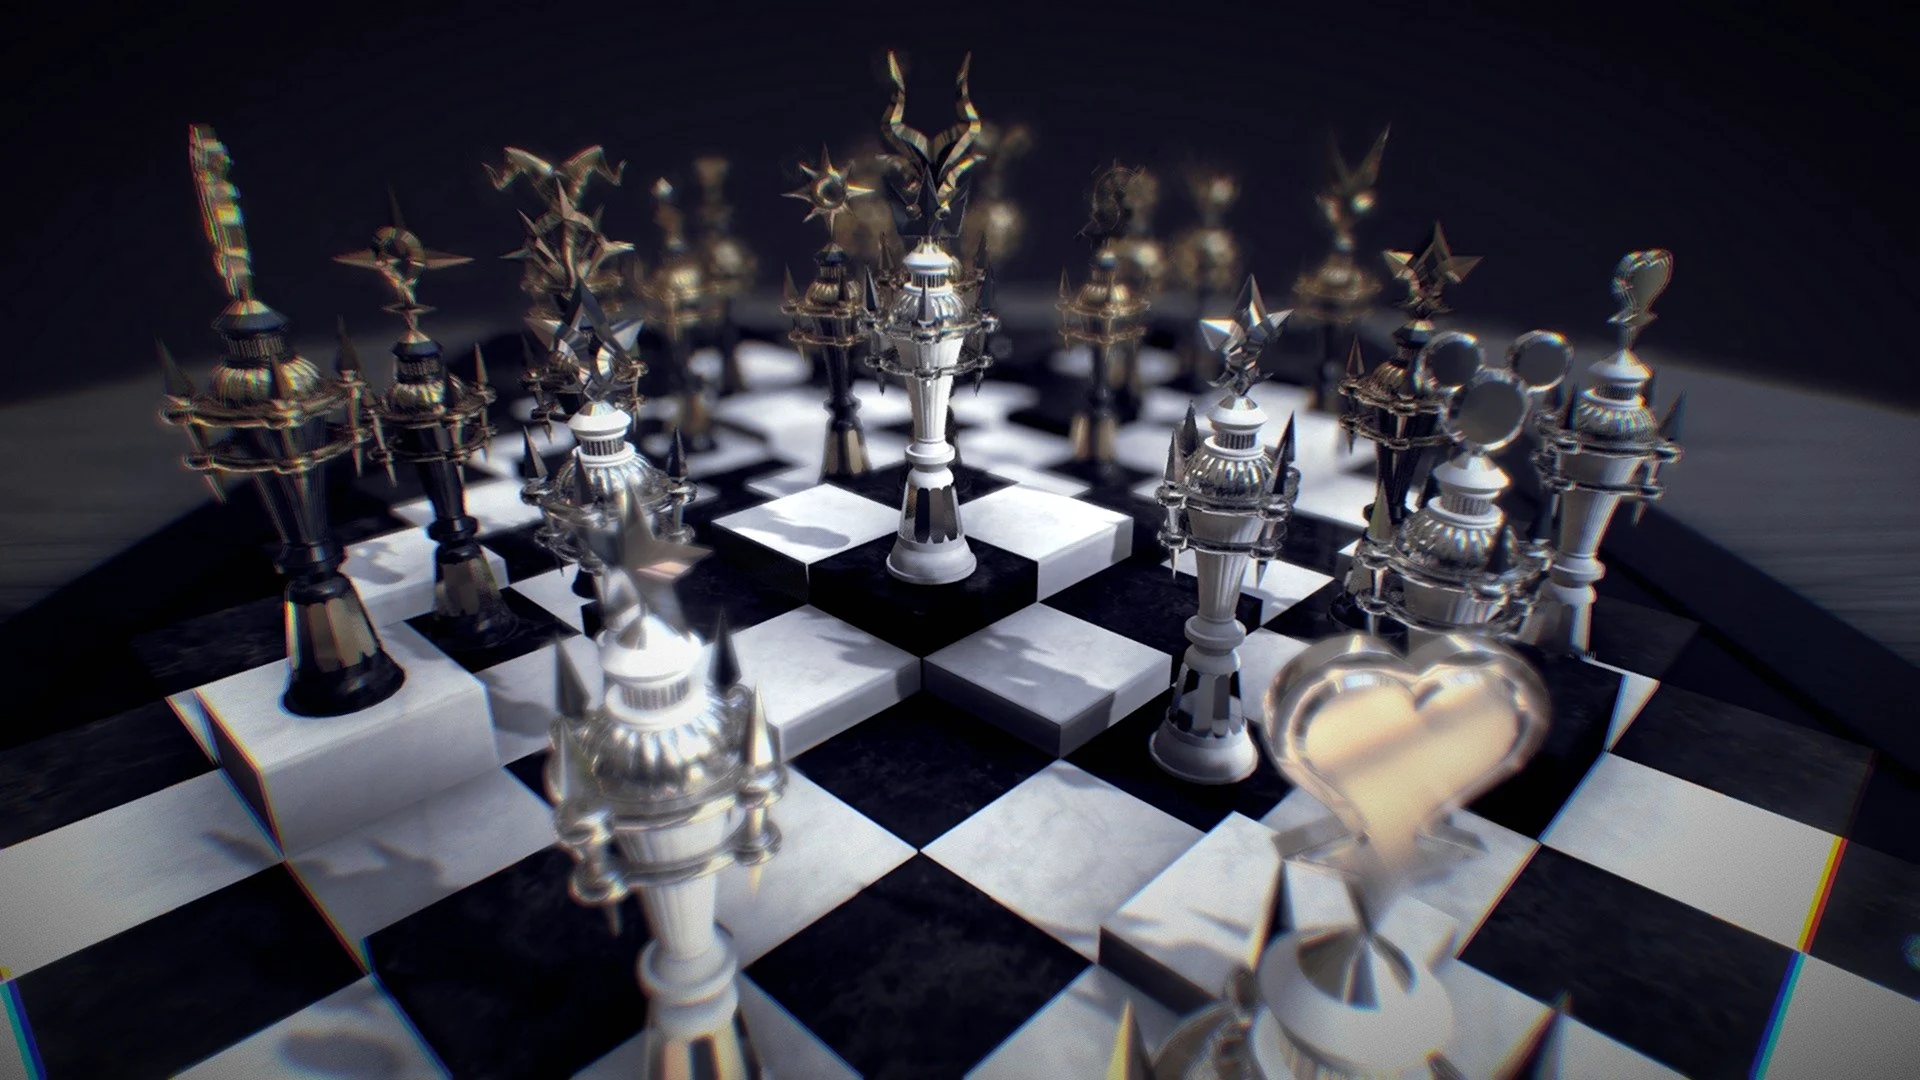 Kingdom Hearts шахматы